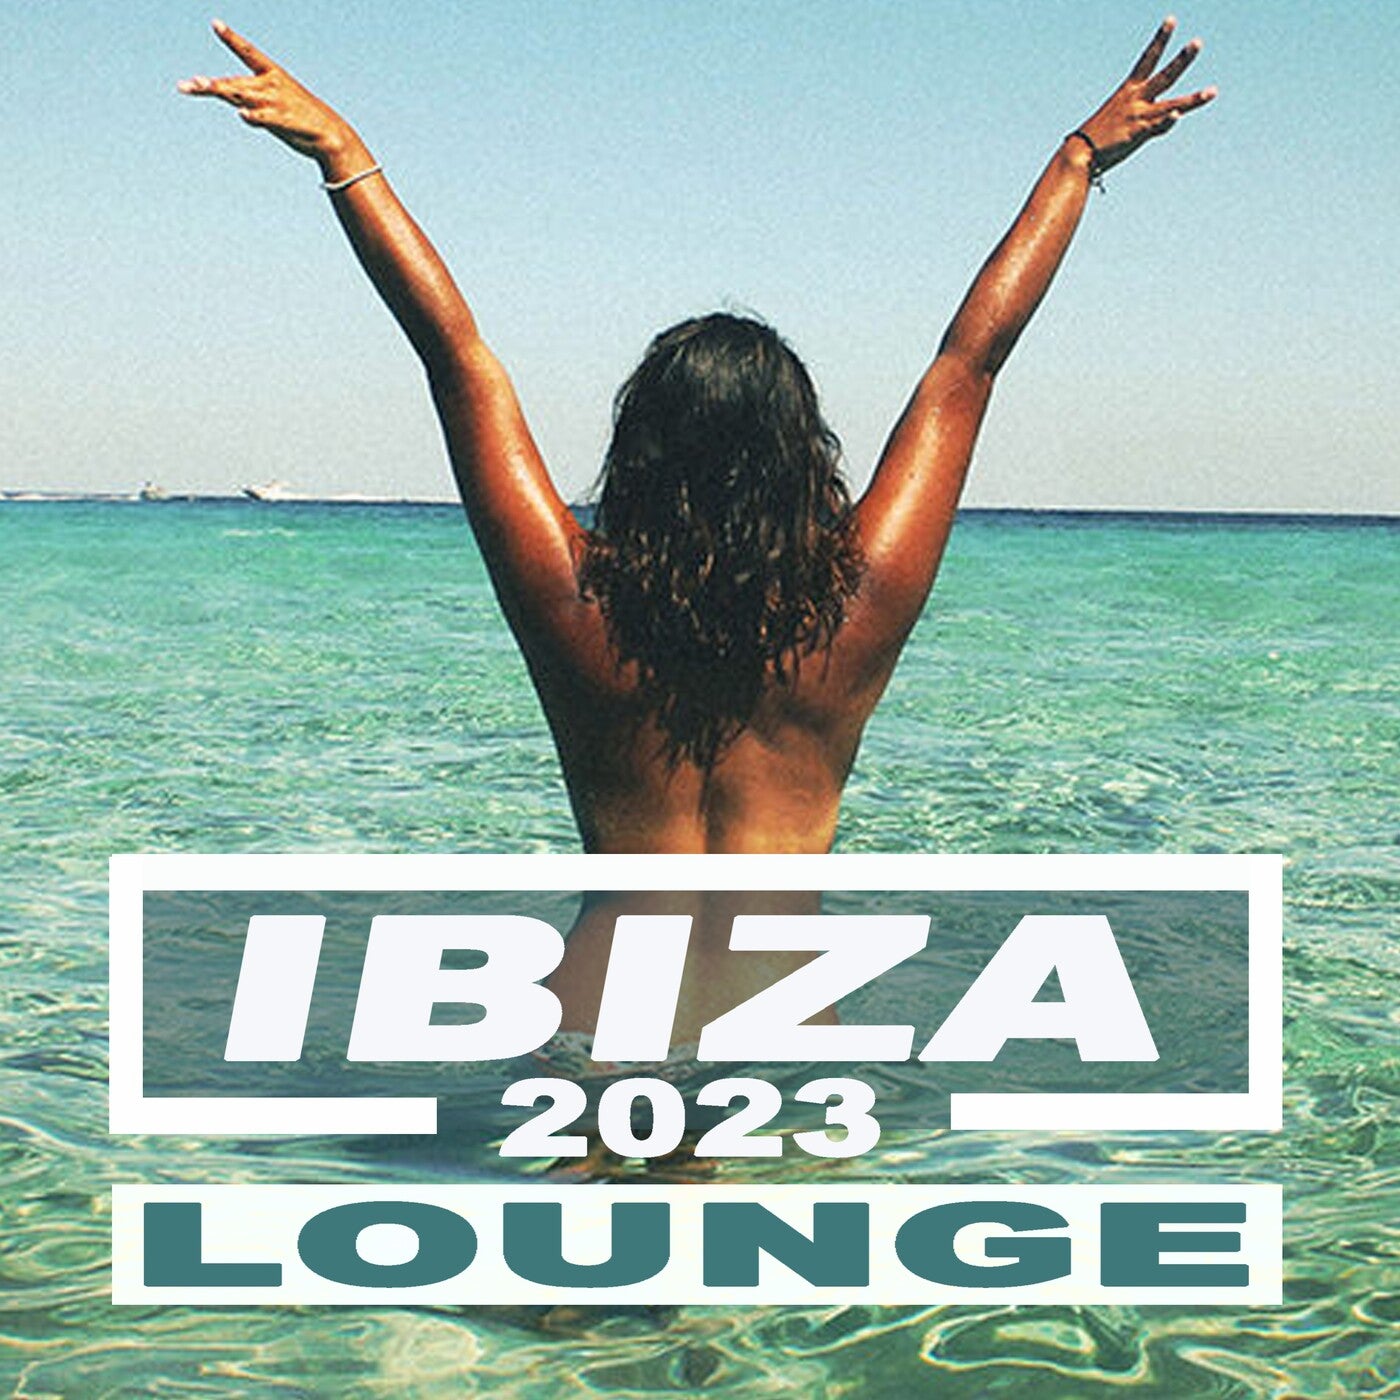 Feeling everyday. Ибица 2019. Дип Хаус Ibiza closing Party 2019. Ибица House Music. Ибица слоган.